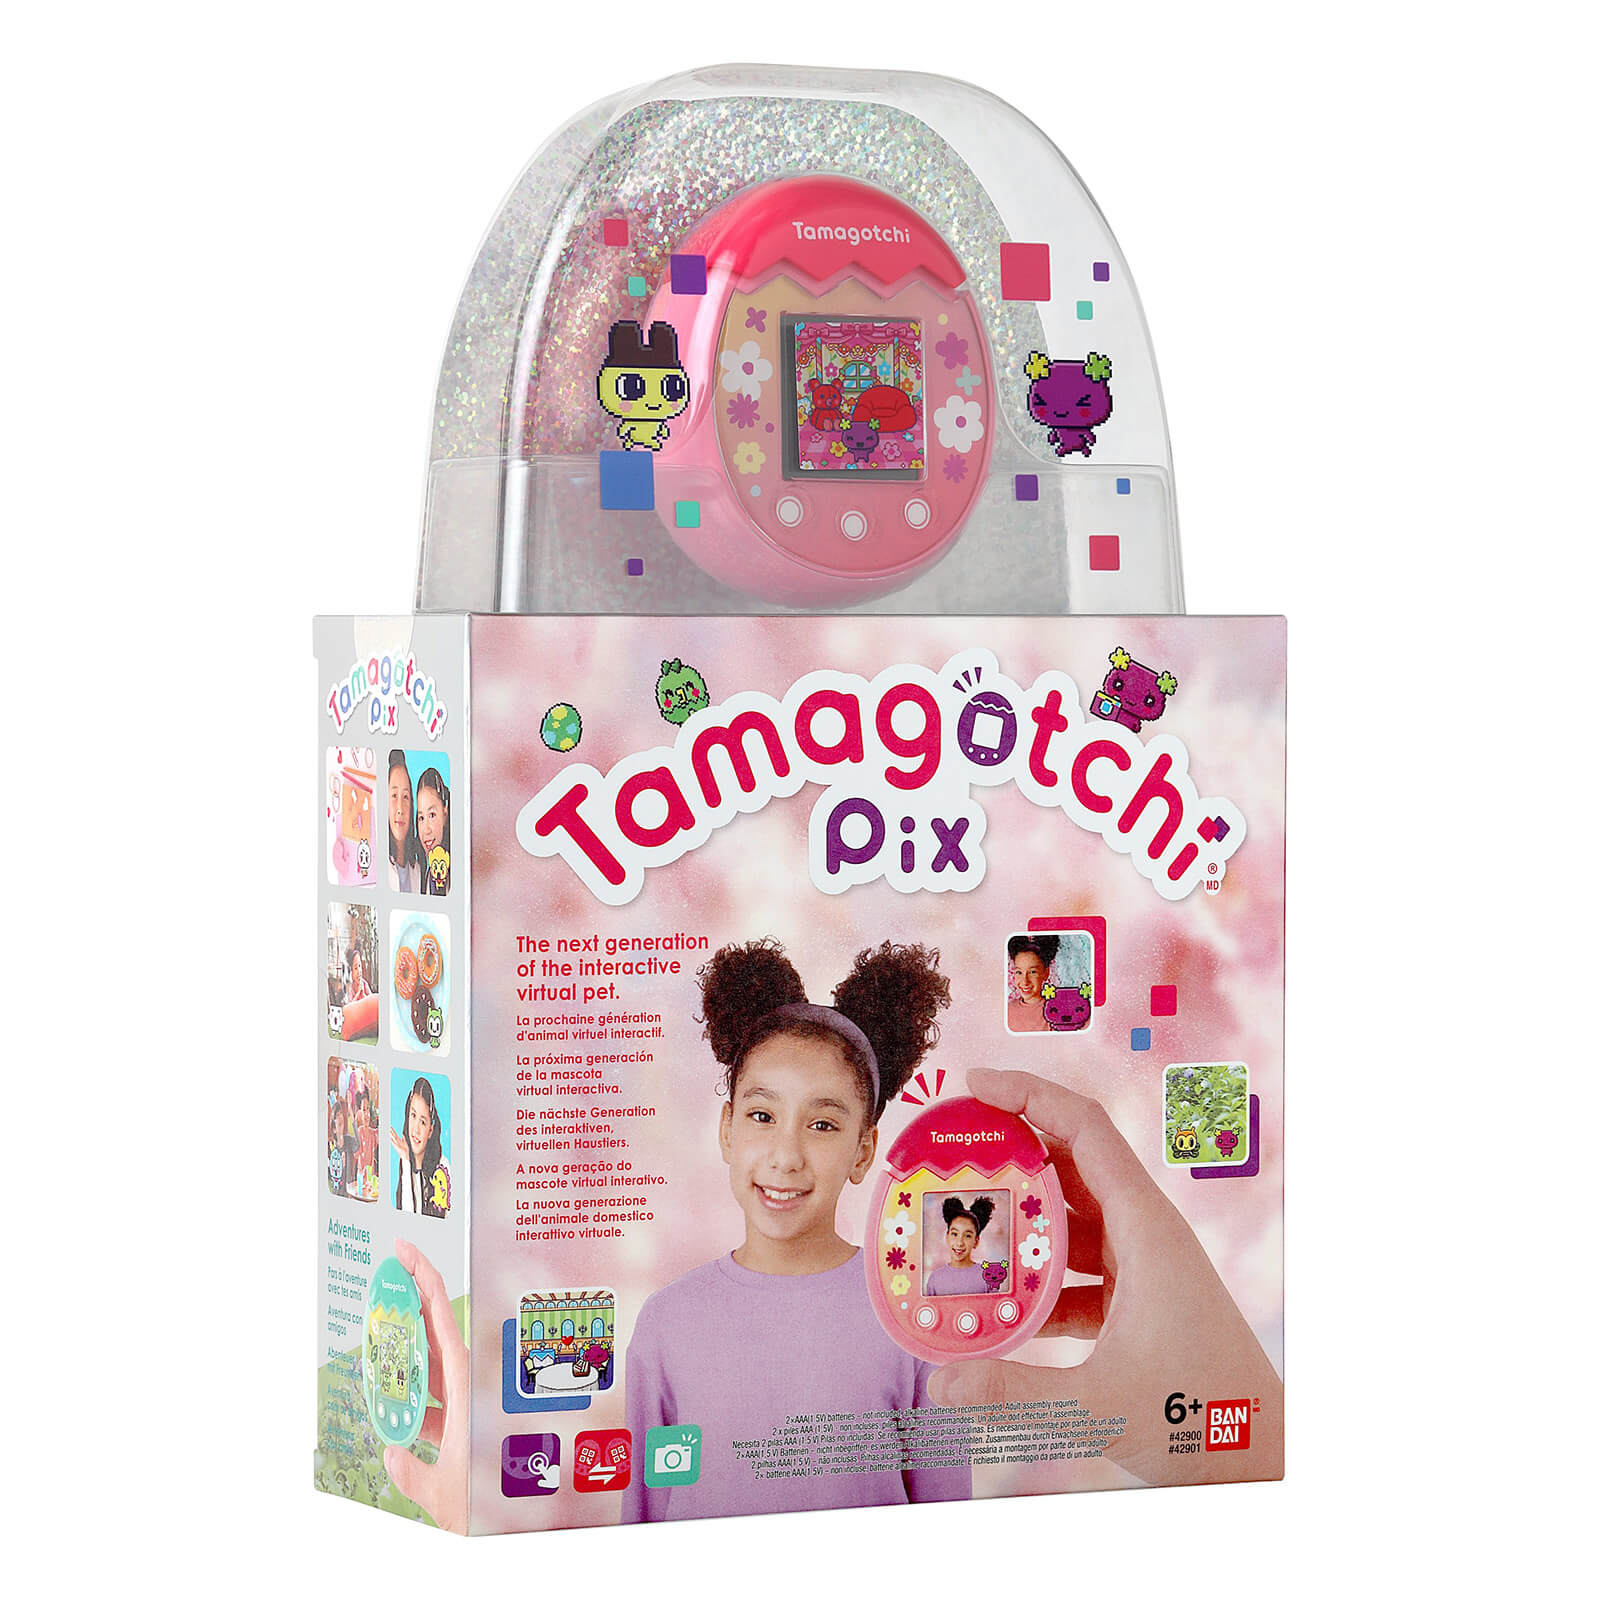 Tamagotchi Pix: get your very own Tamagotchi with a camera